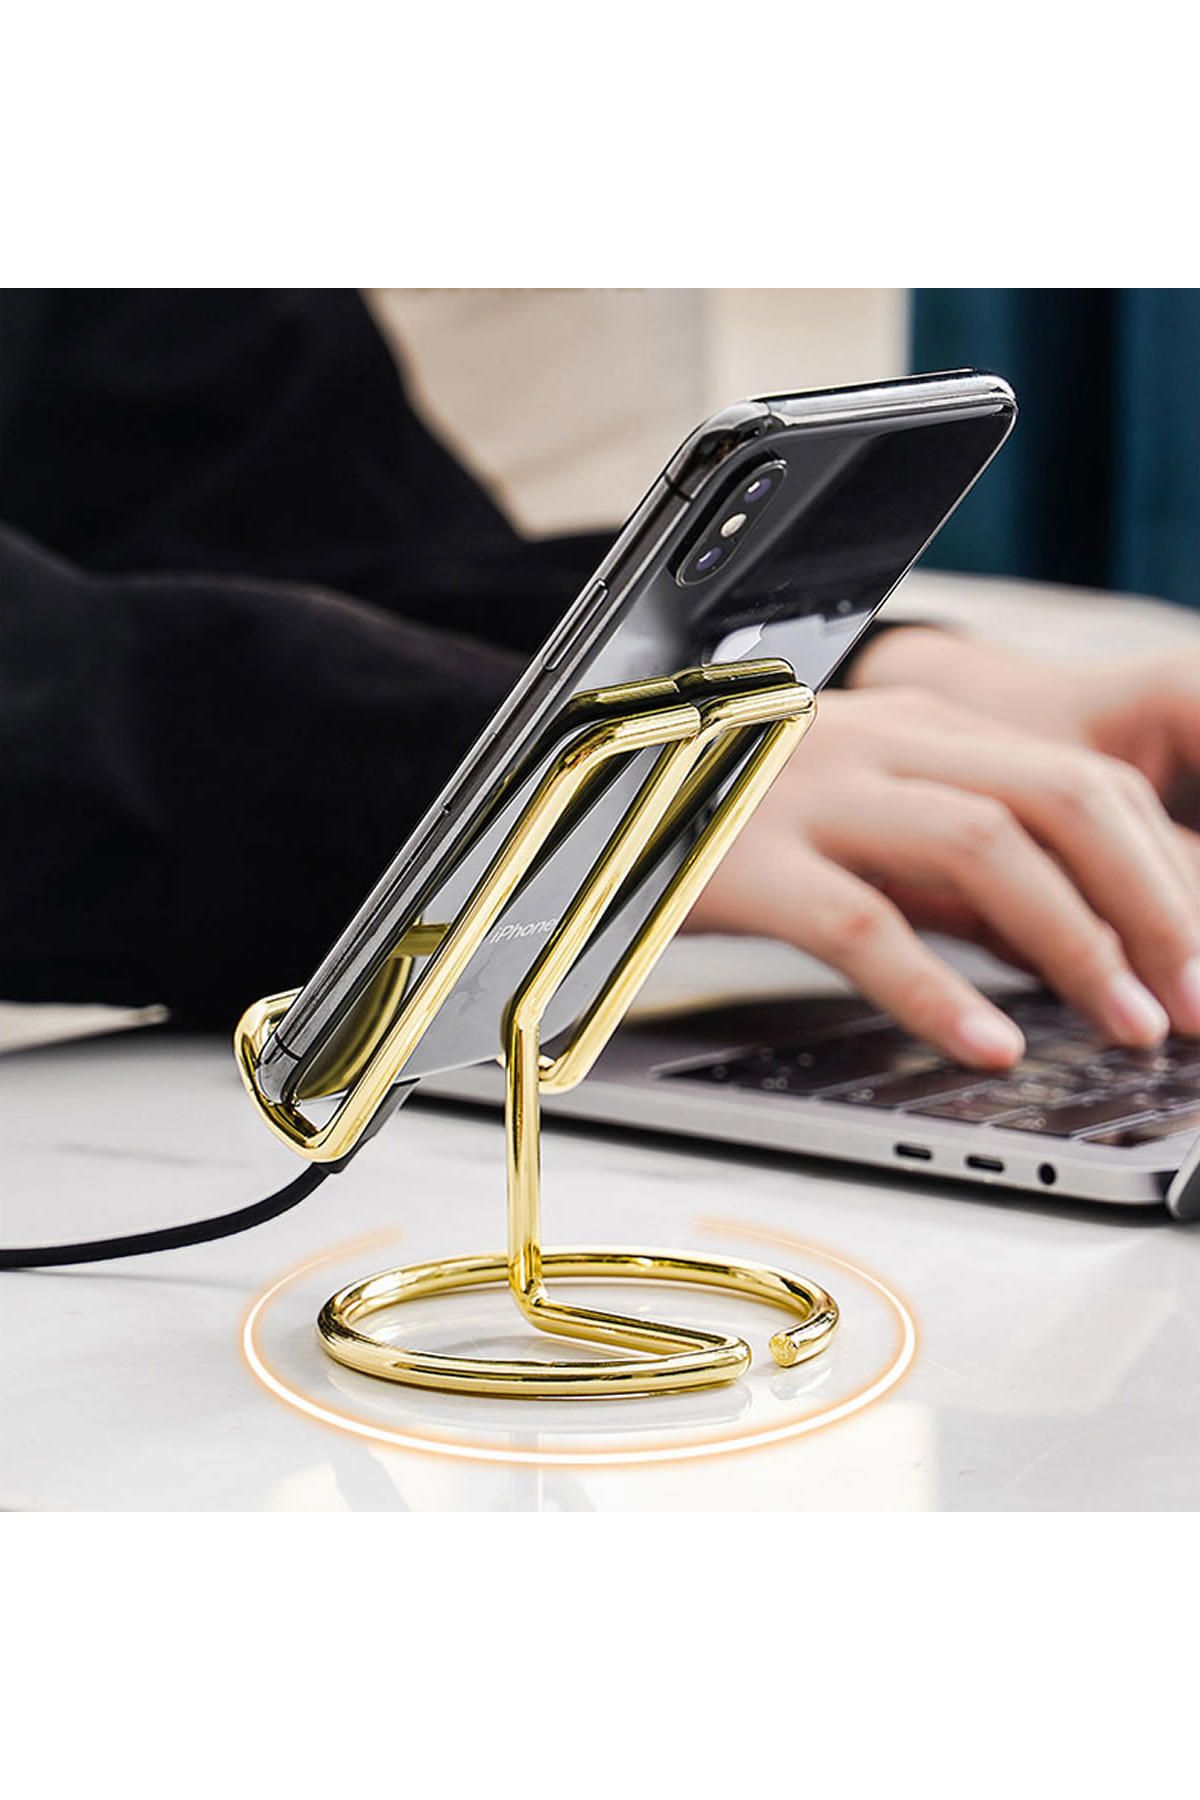 Miniminti Gold Metal Masaüstü Telefon Tutucu